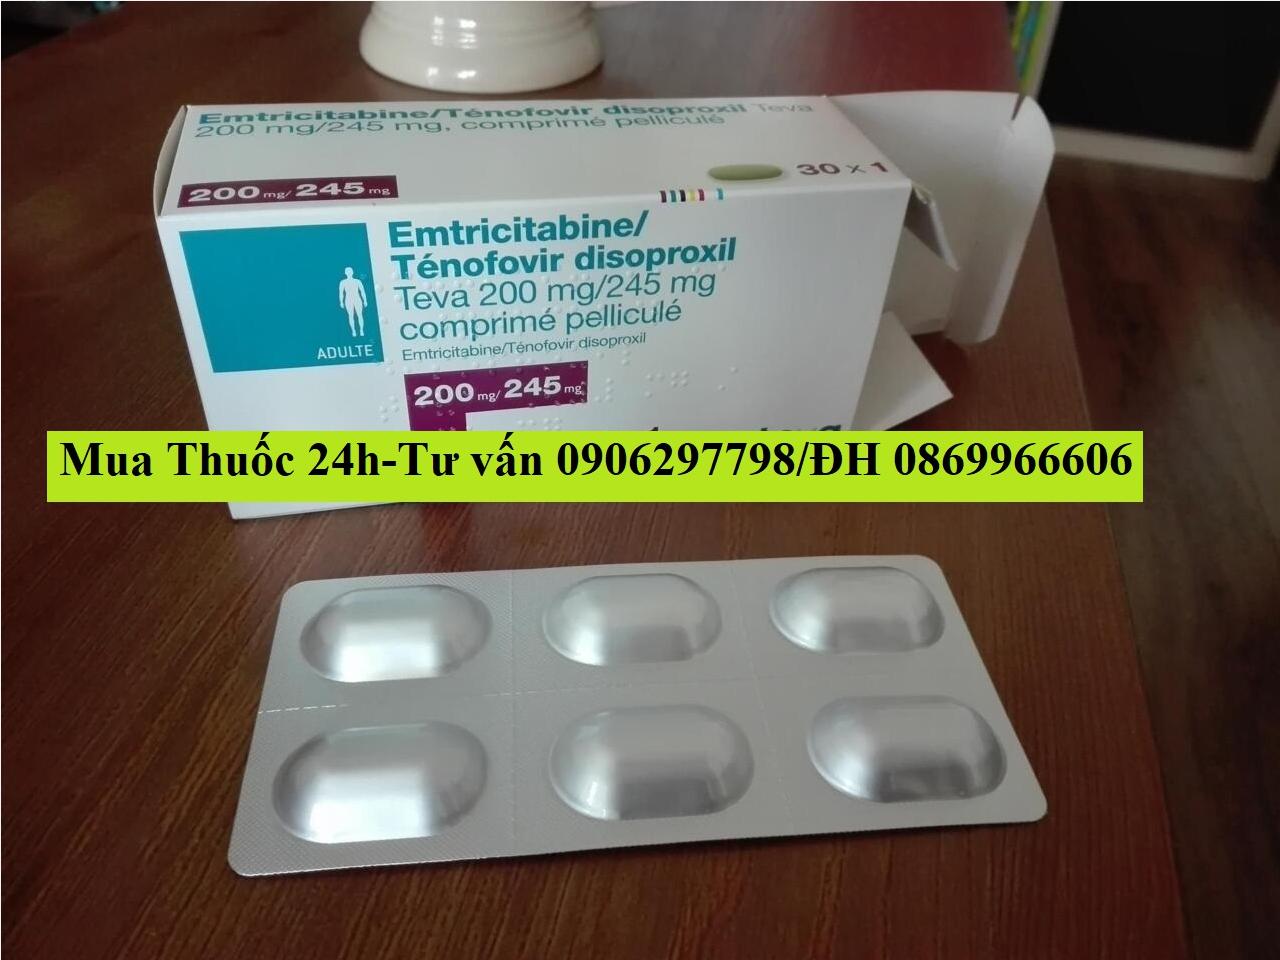 Thuốc Emtricitabine/Tenofovir disoproxil Teva 200 mg/245 mg giá bao nhiêu mua ở đâu?